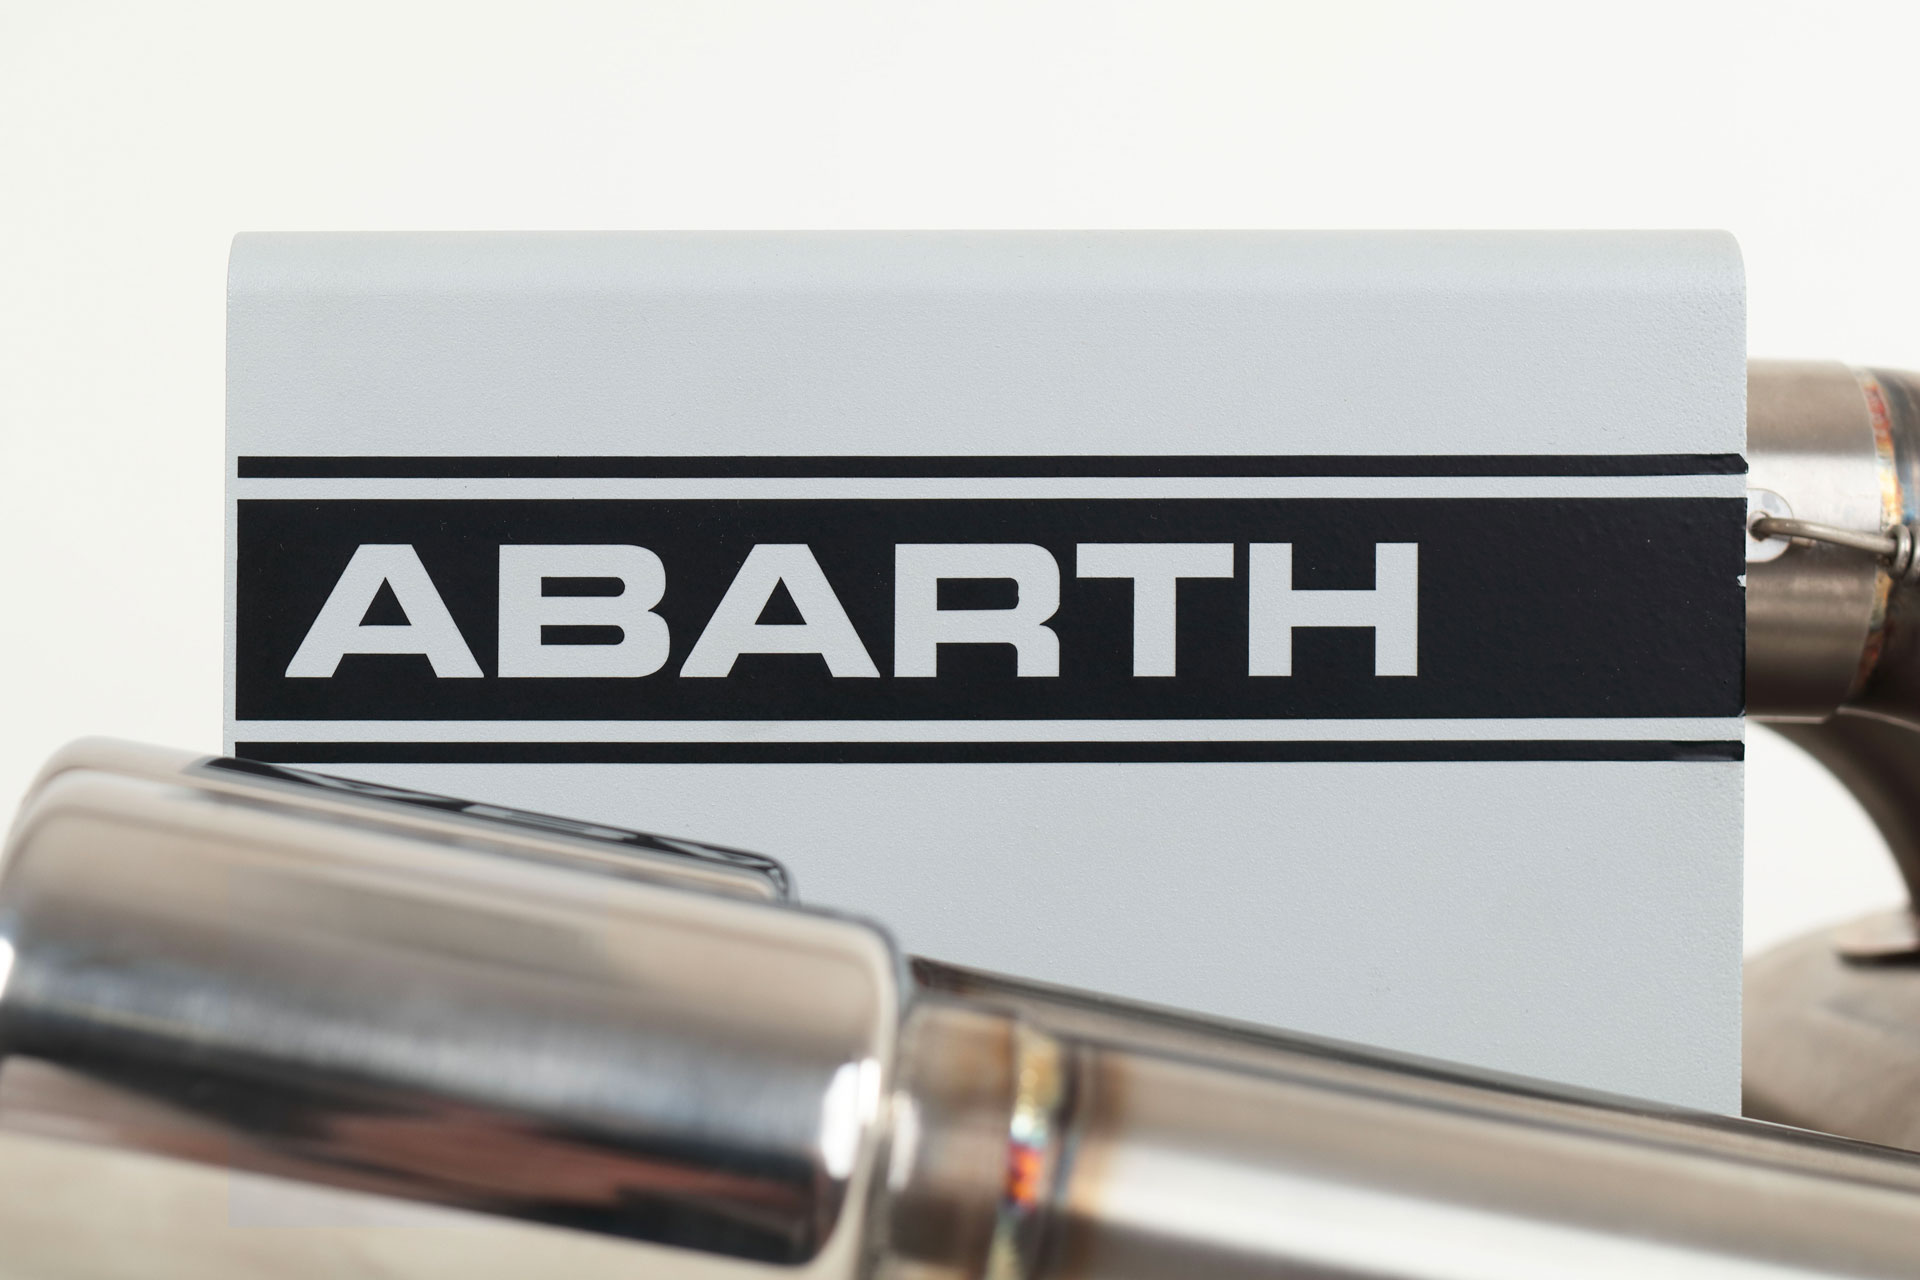 IXOOST KUBO ABARTH 595 - impianti audio casa a marchio Abarth